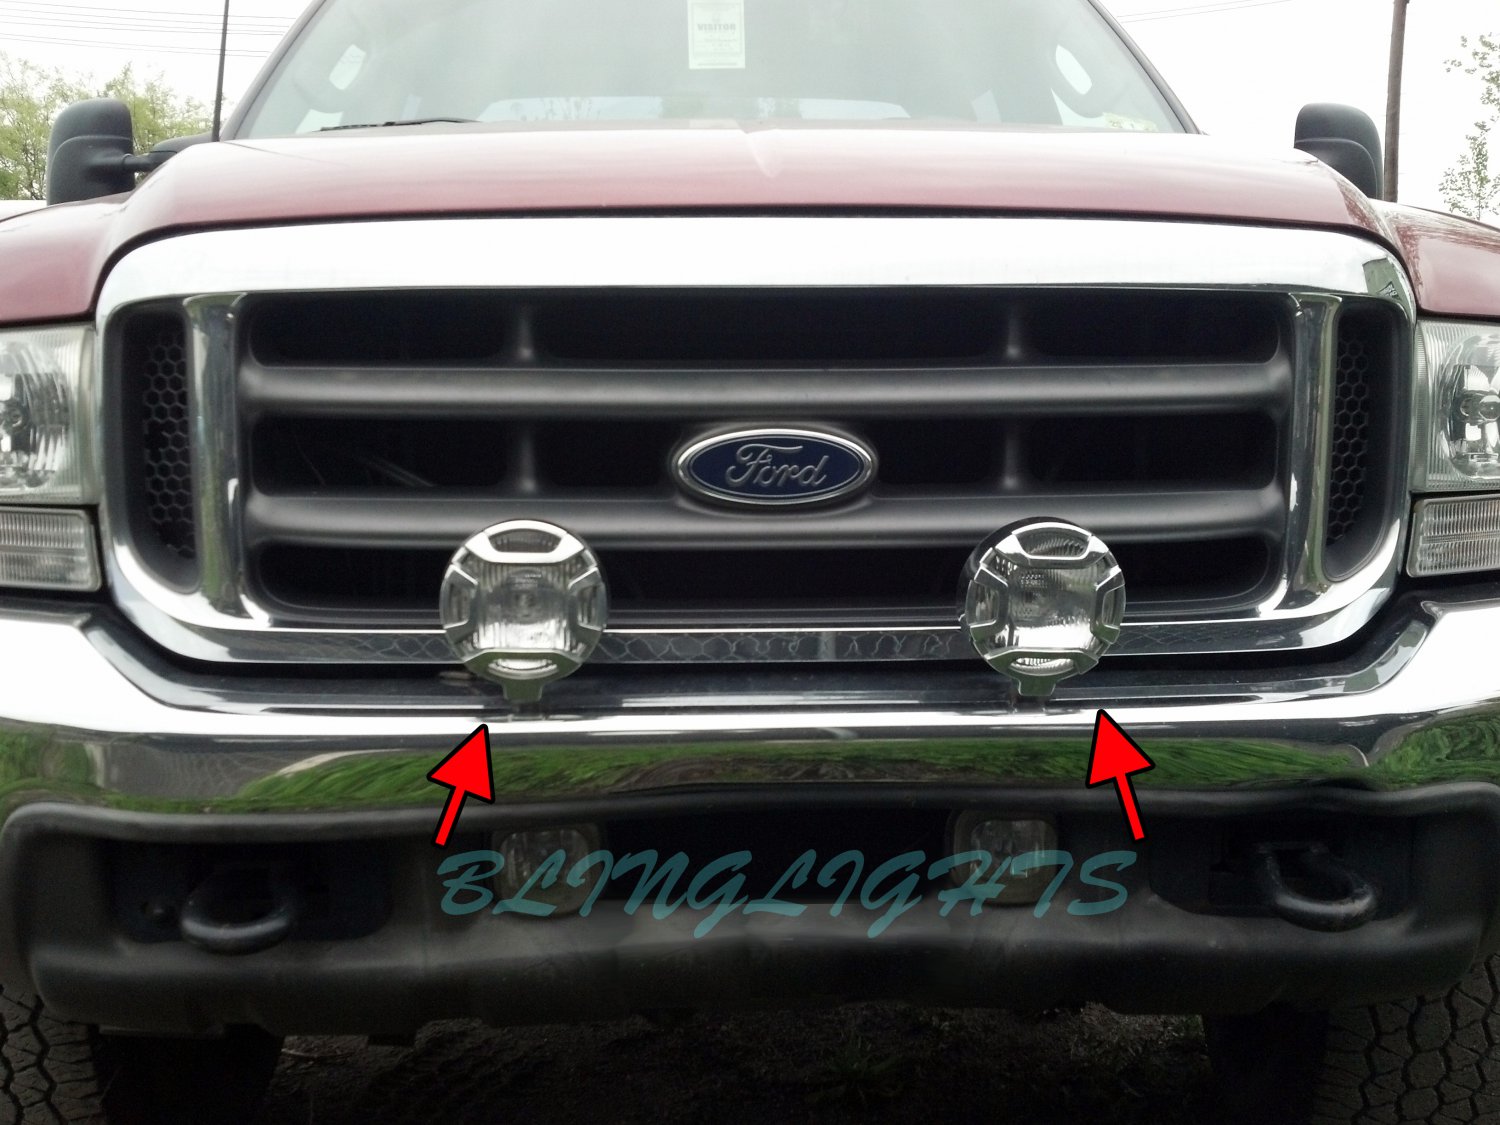 Ford ranger front bumper light bar